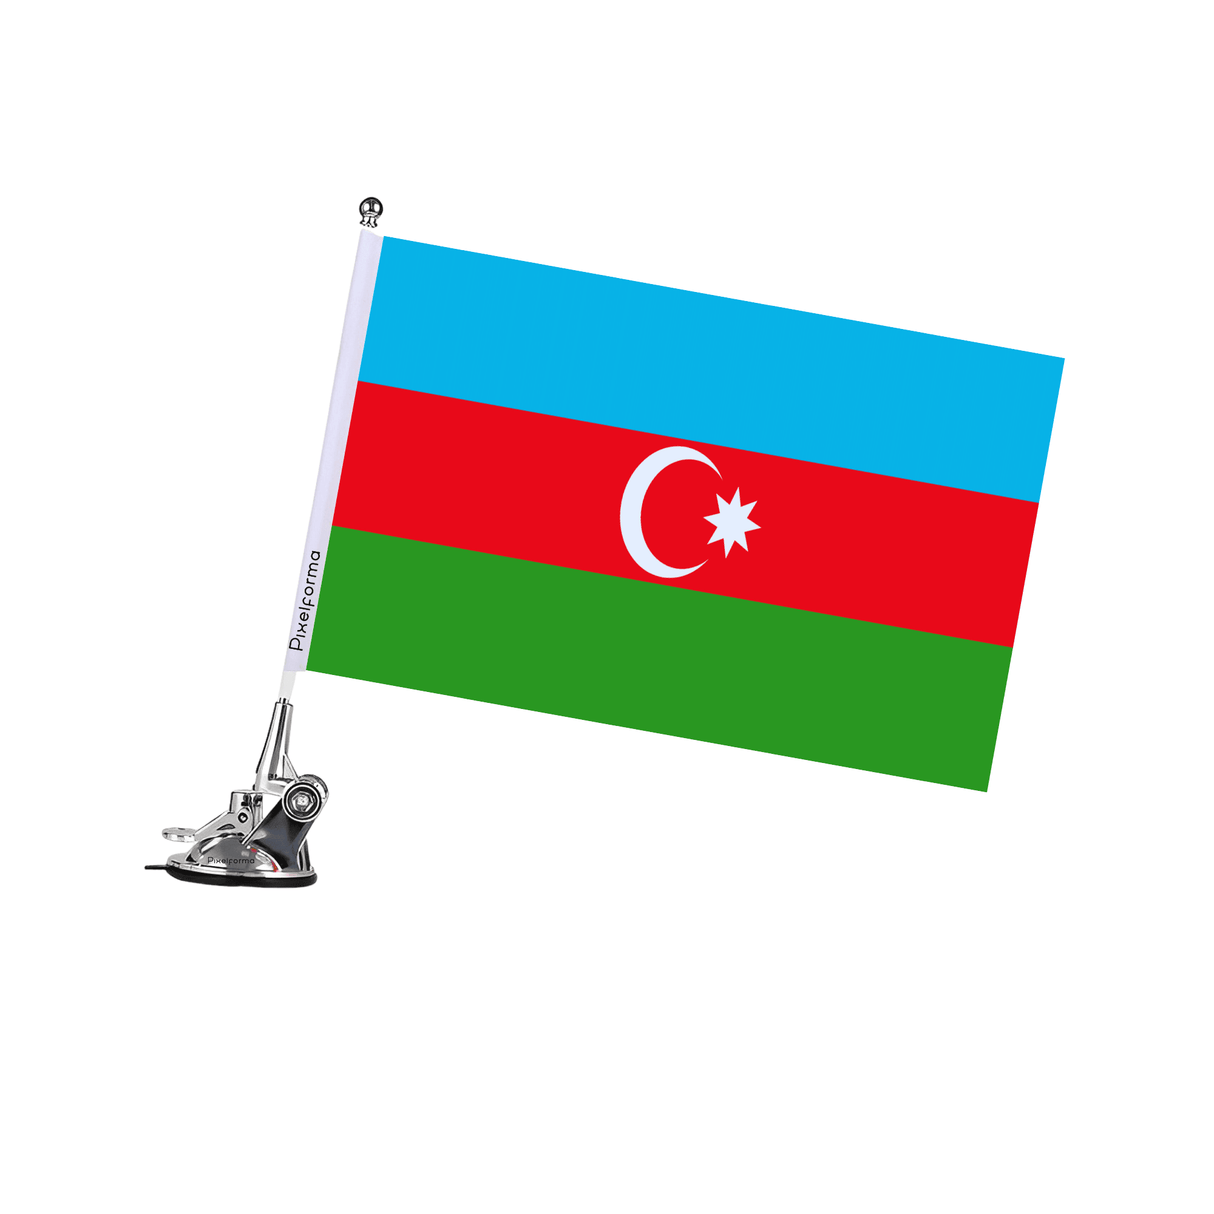 Mât à Ventouse Drapeau de l'Azerbaïdjan - Pixelforma 